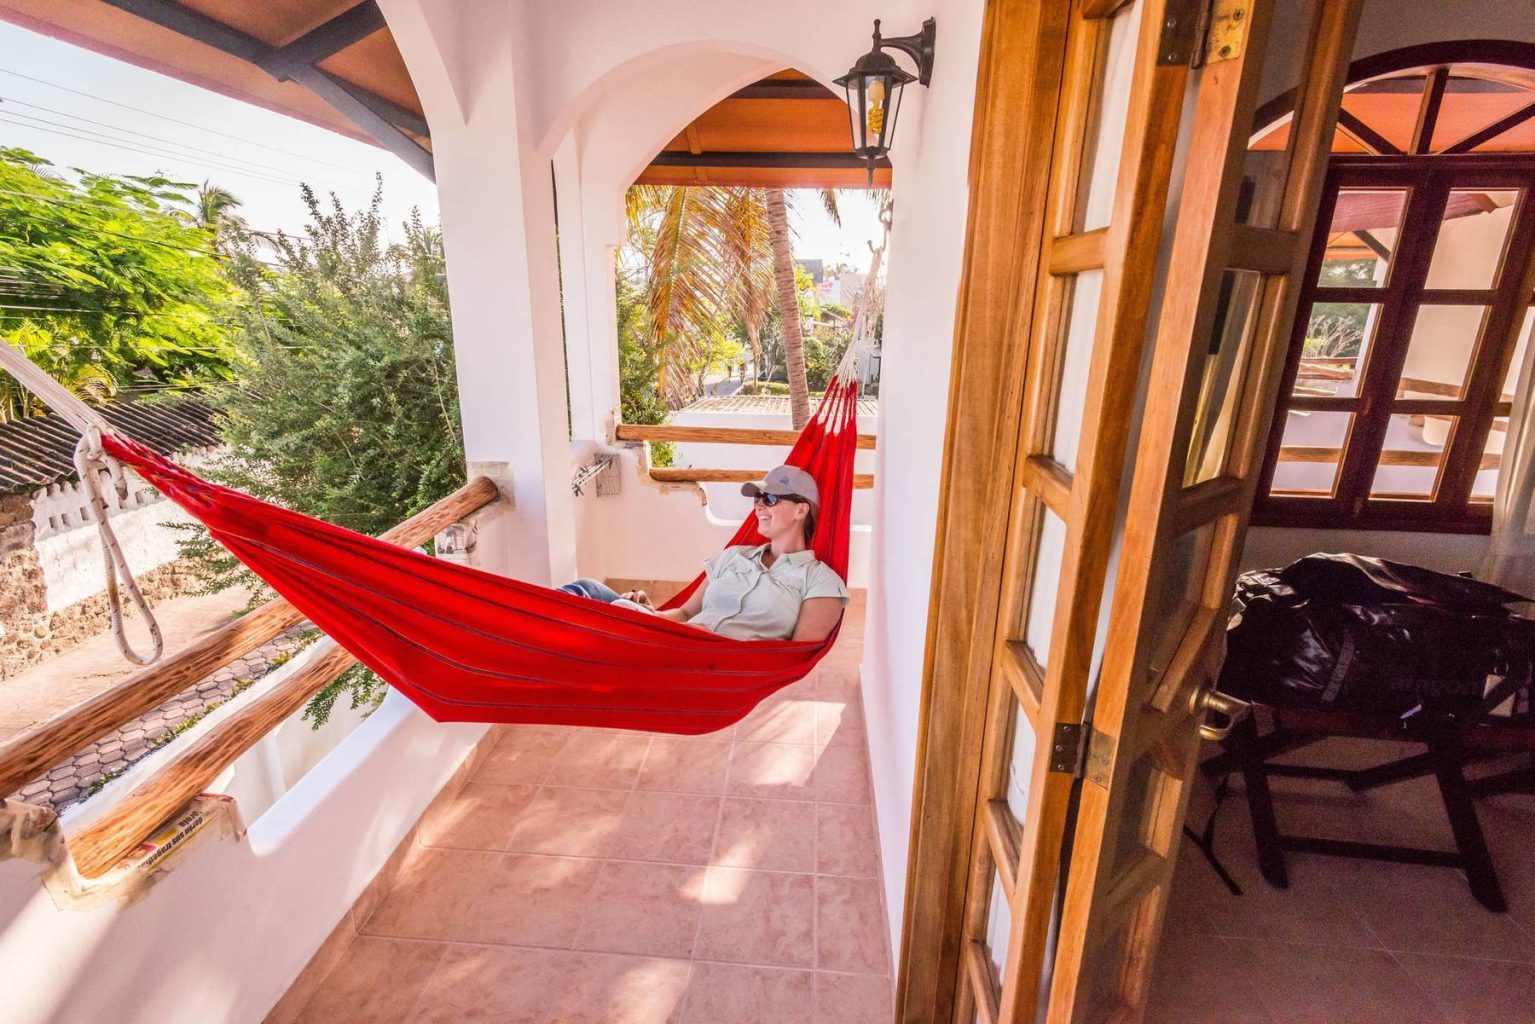 A traveler takes a breakin a hammock while visiting Galapagos